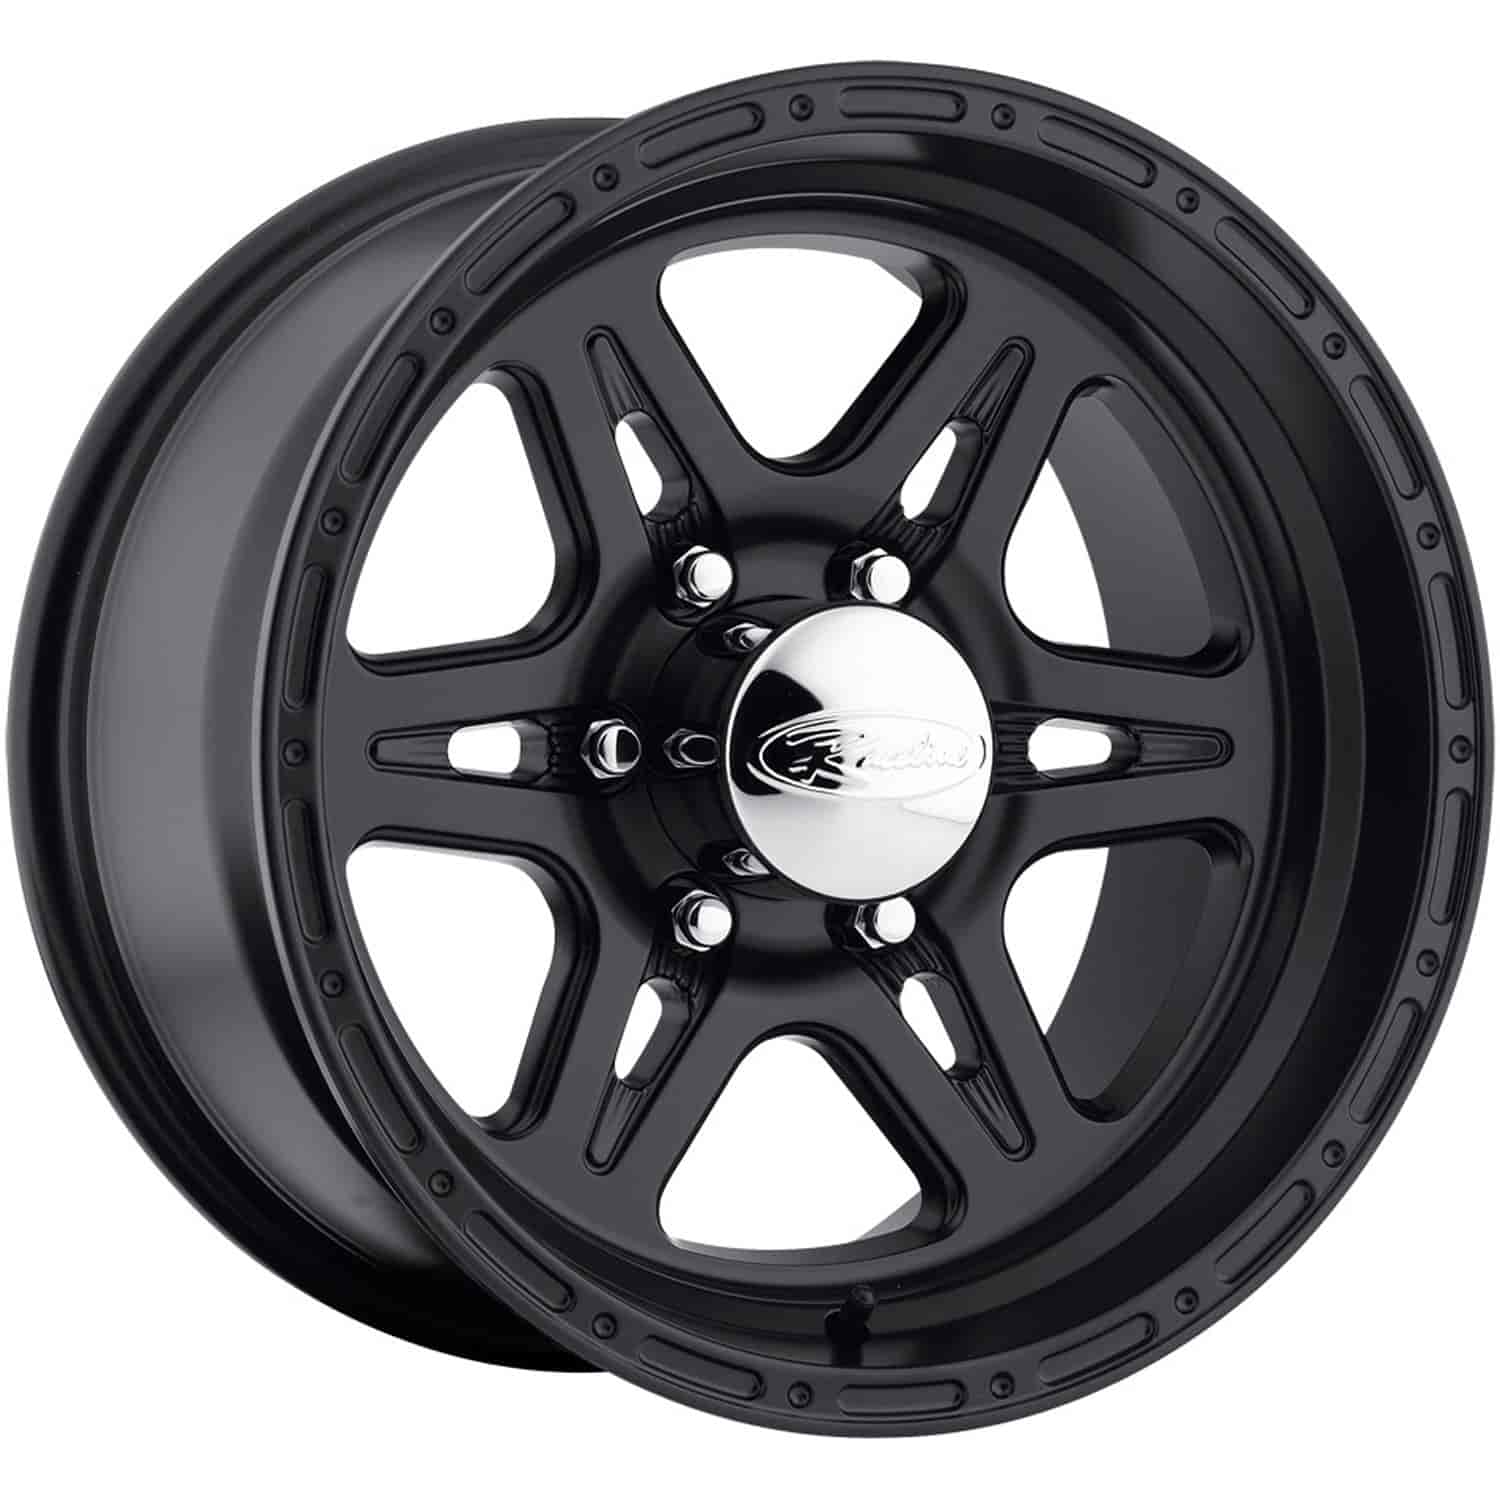 891 Renegade Wheel Size: 17 X 9" Bolt Pattern: 6X139.7 mm [Satin Black]